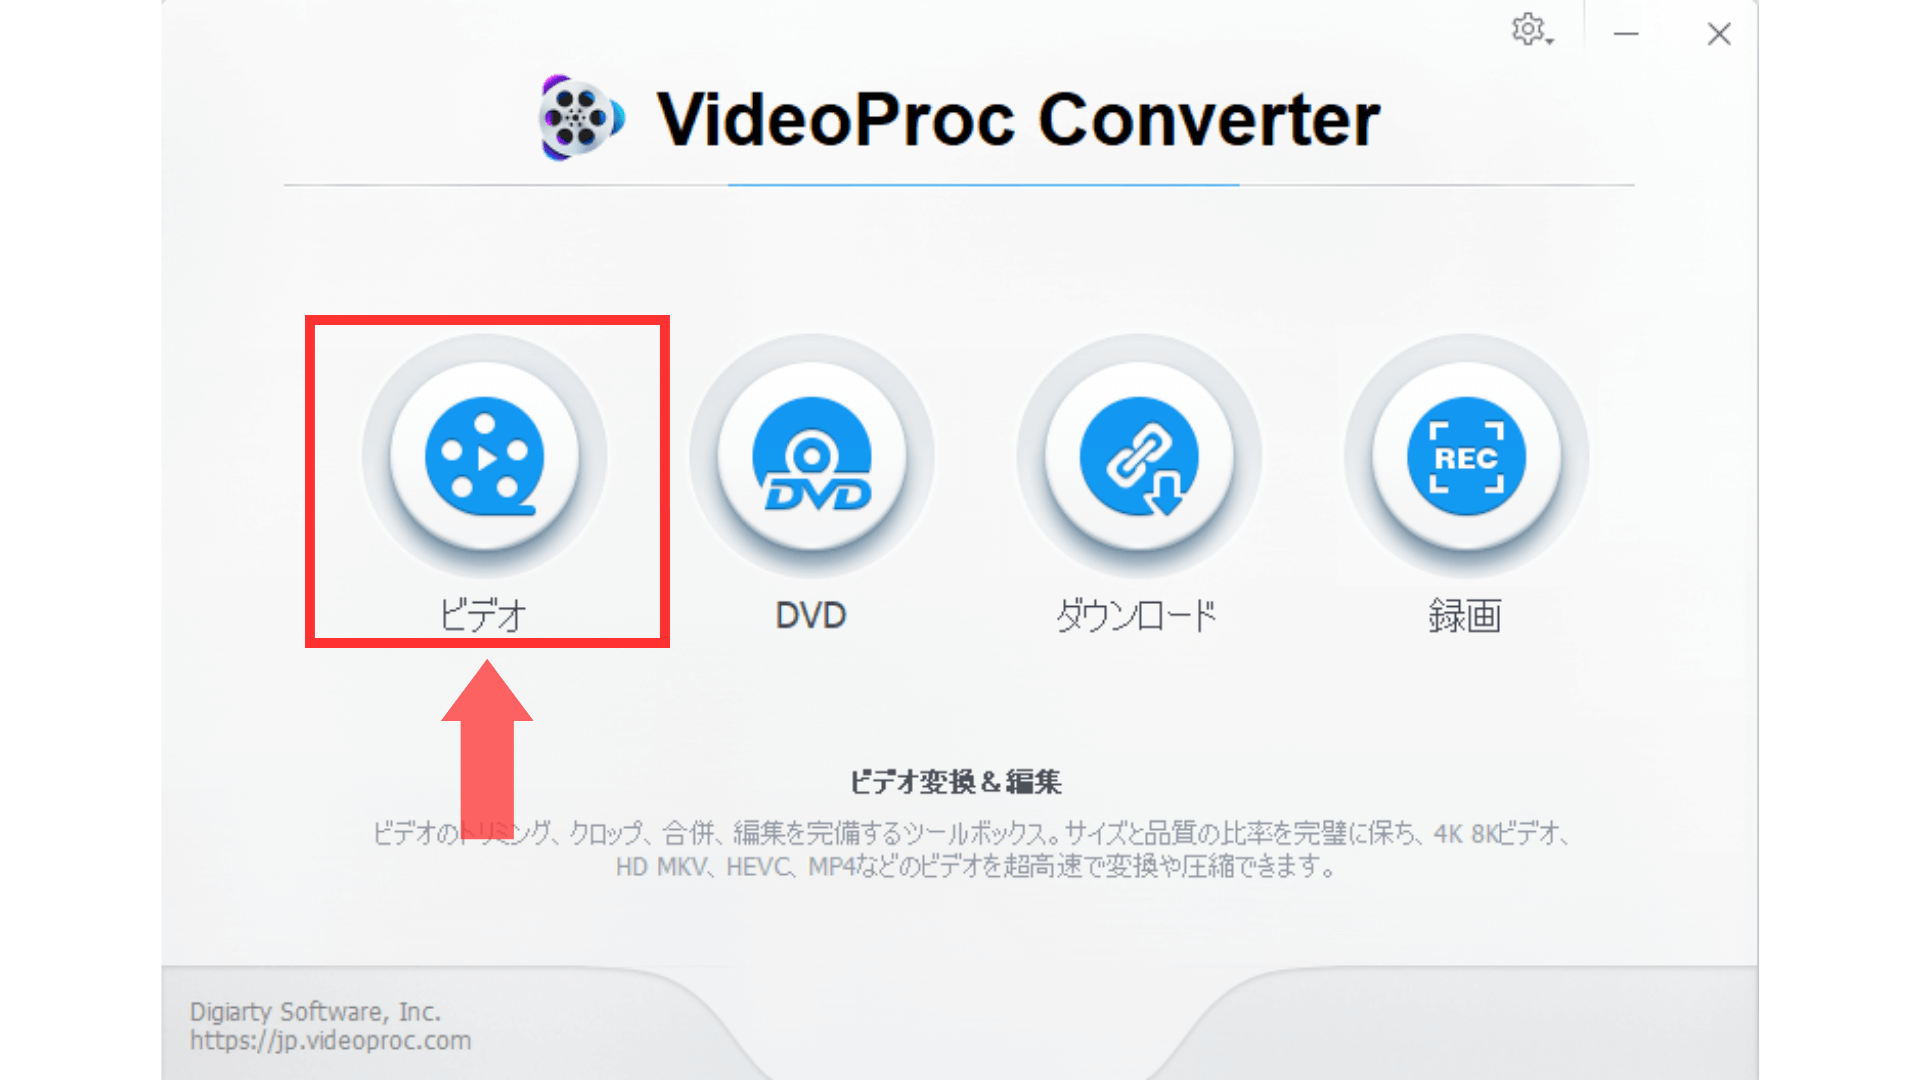 VicdeoProc Converterを起動して「ビデオ」を選択する